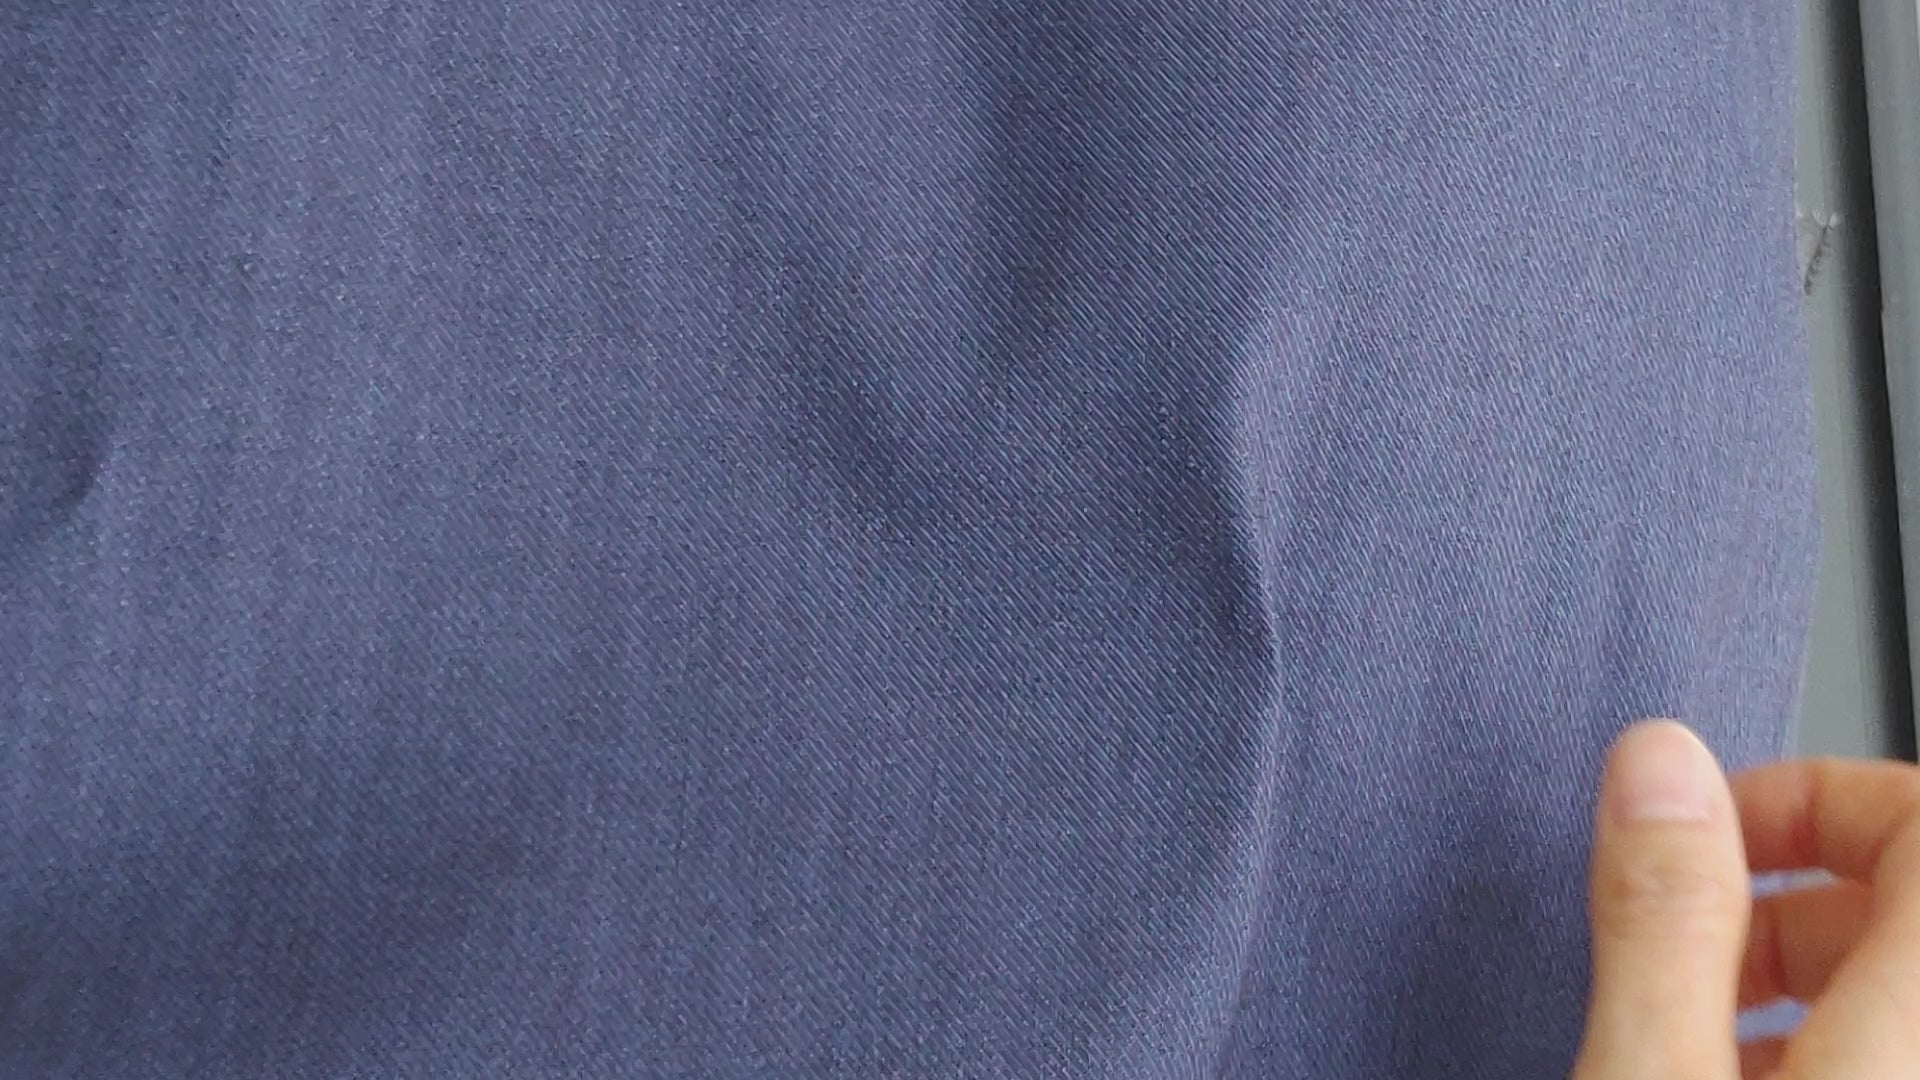 Linen Cotton Stretch Twill: Denim-Inspired Style Fabric 5988